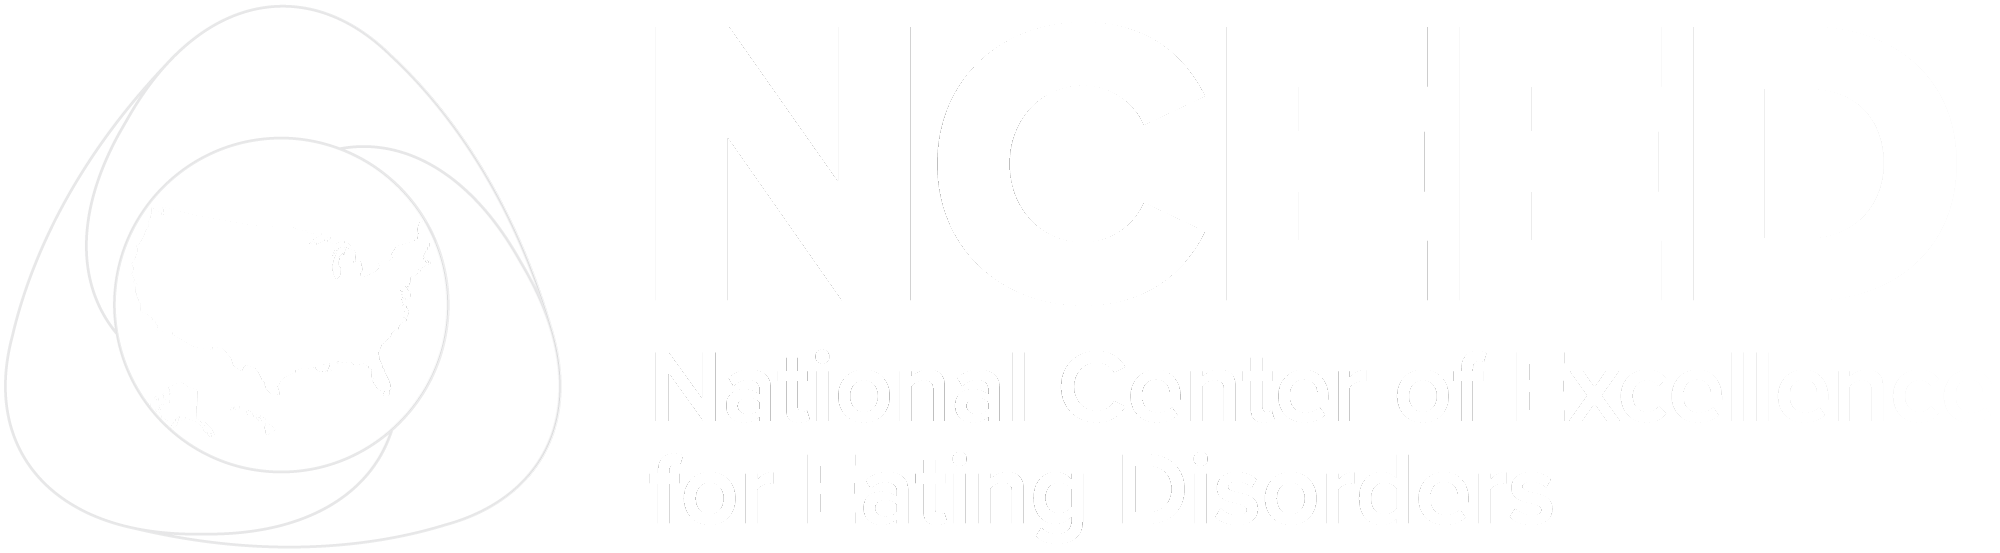 NCEED logo